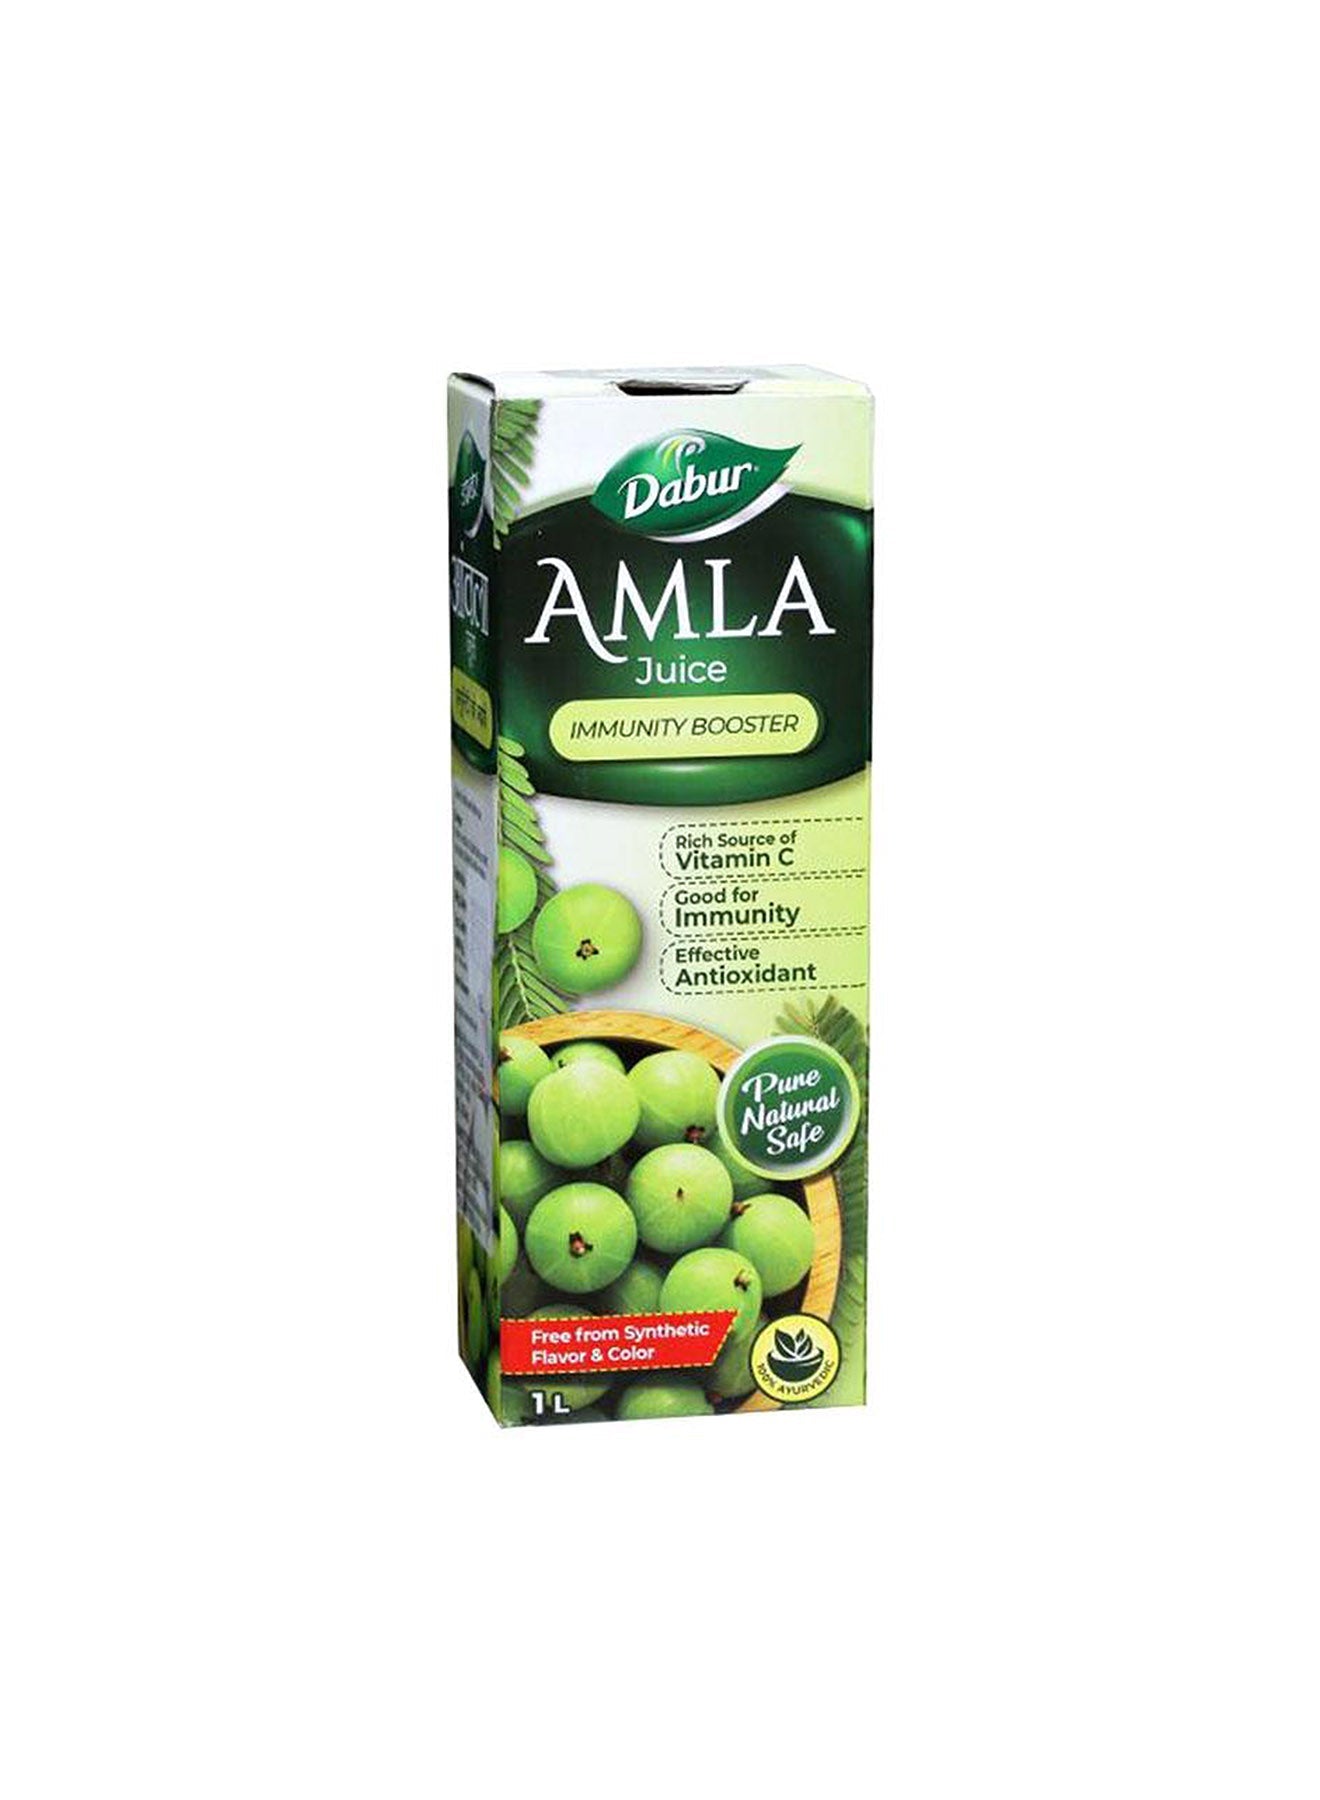 Dabur Amla Juice 1 Litre Immunity Booster Pure Natural Safe